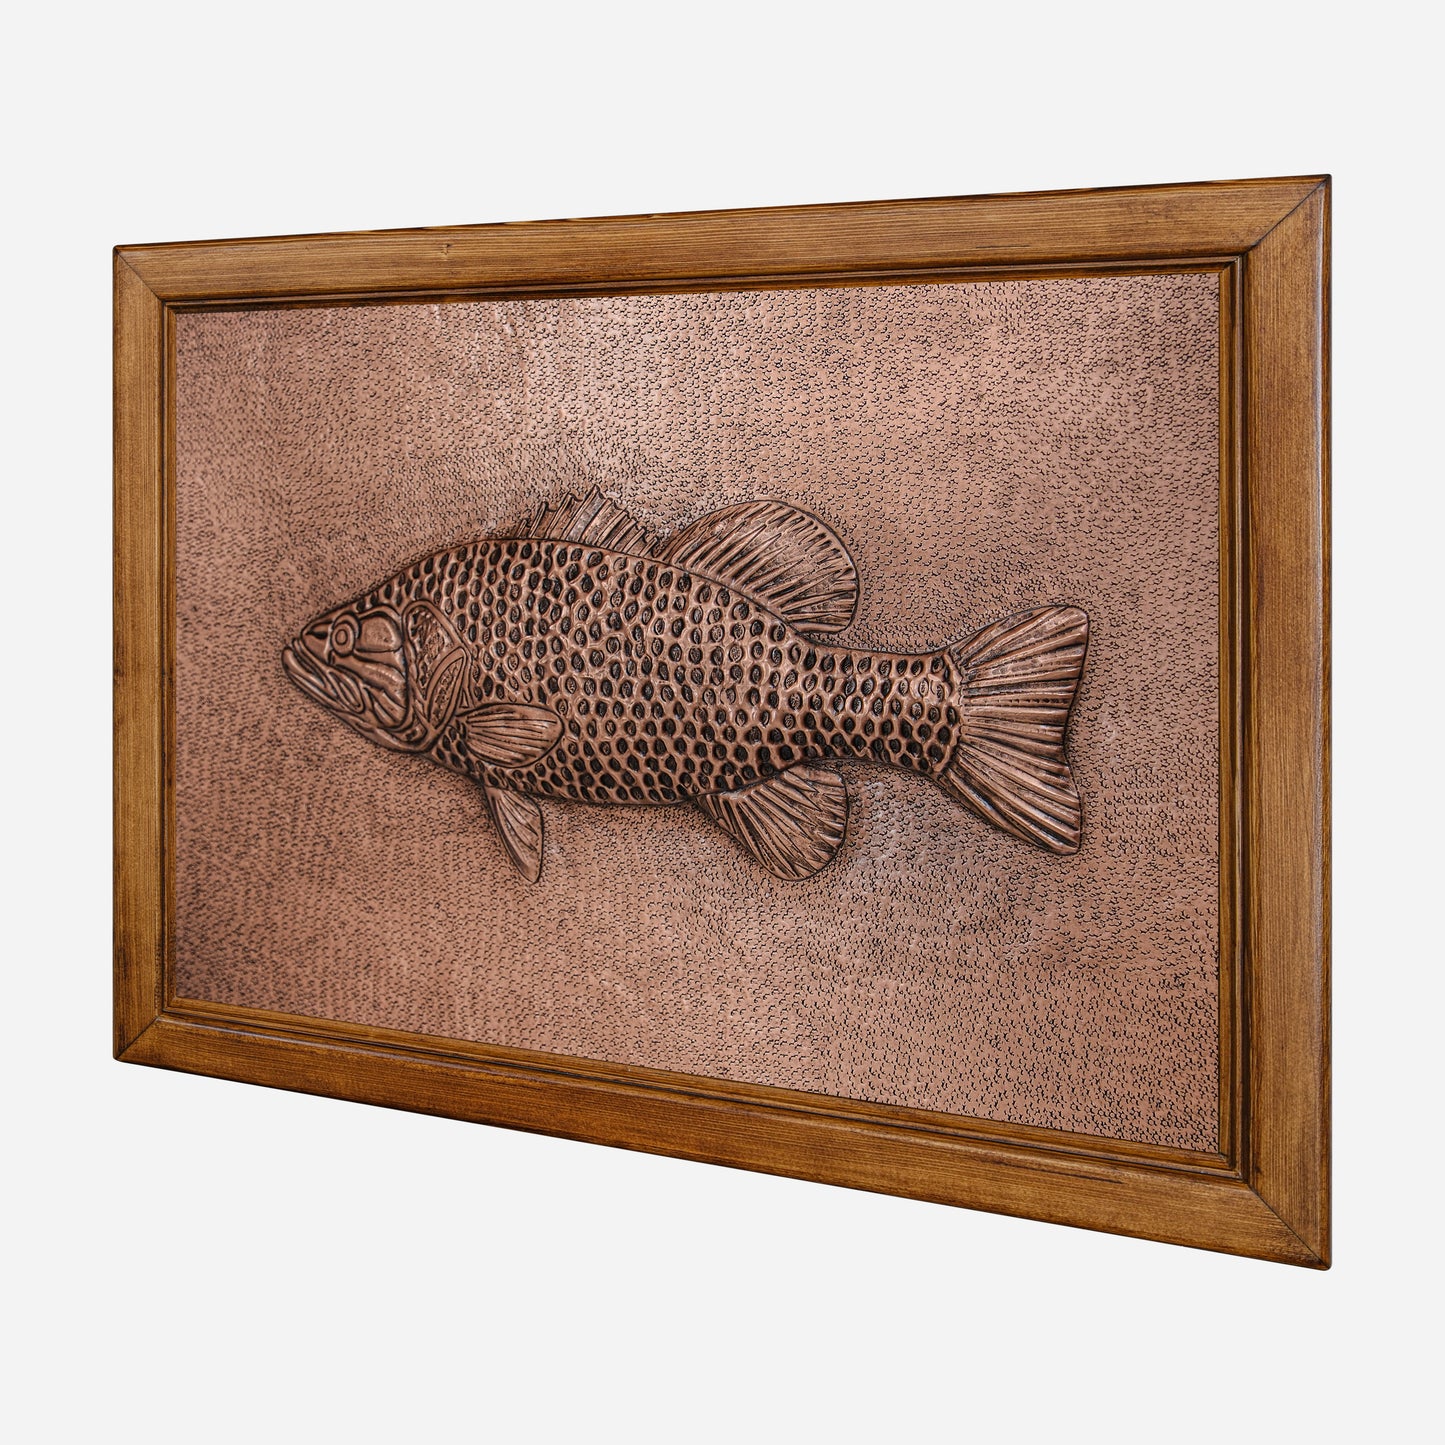 Framed Copper Artwork (Largemouth Bass Fish)